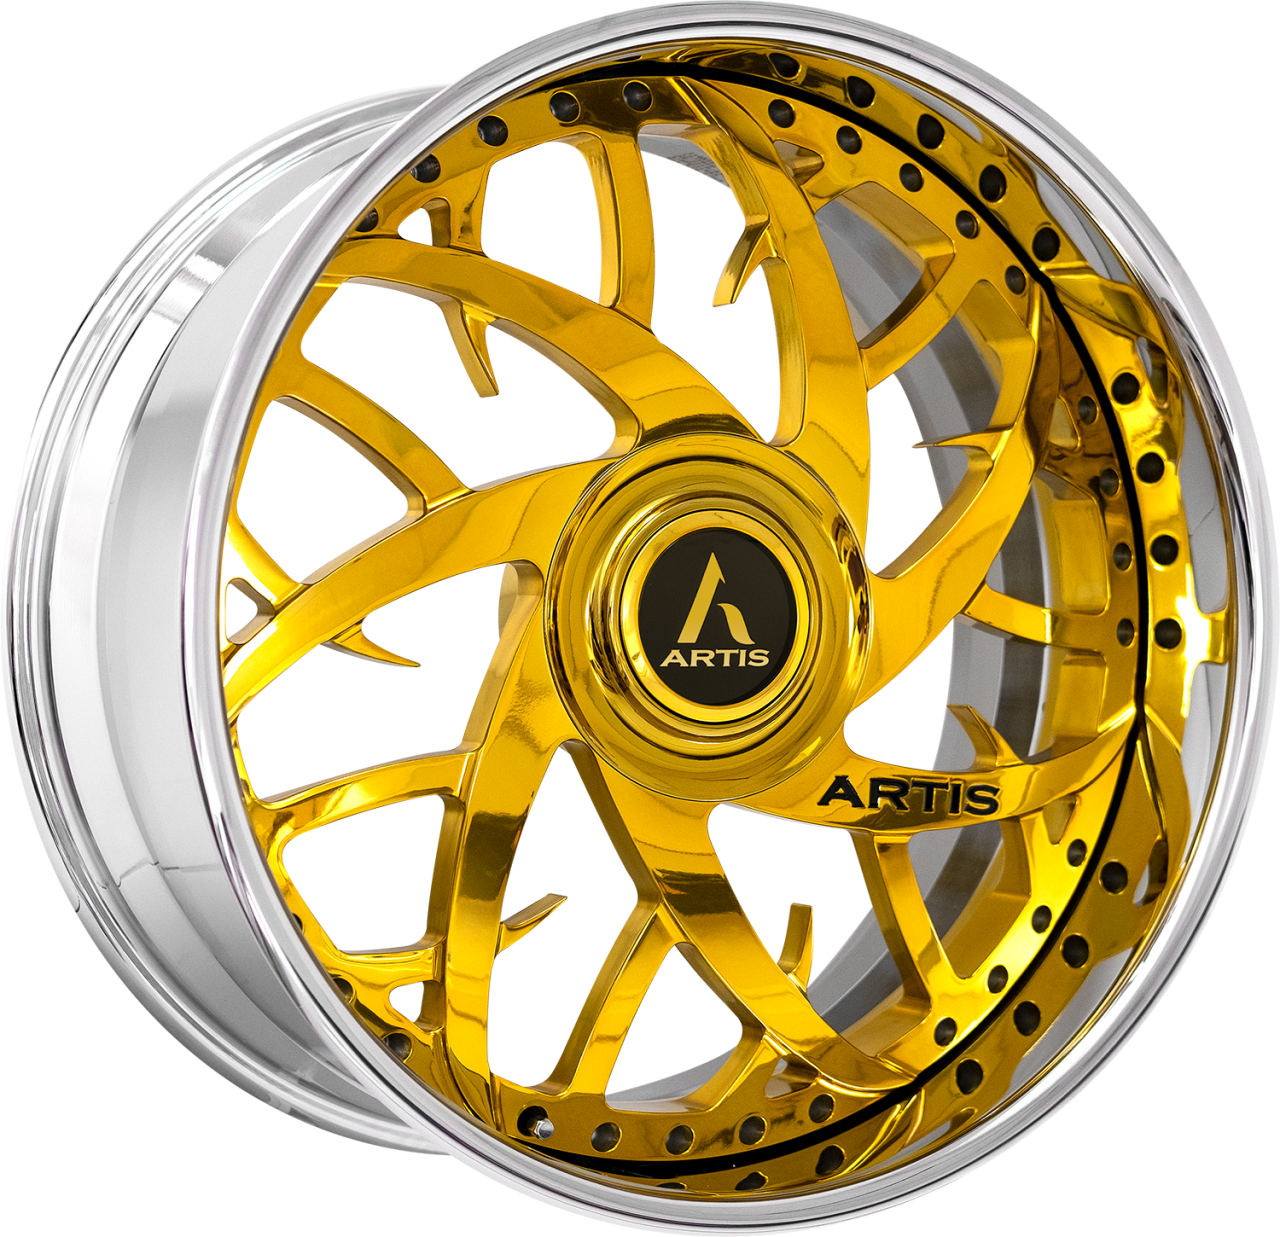 Artis Forged Harlem wheel with Gold finish